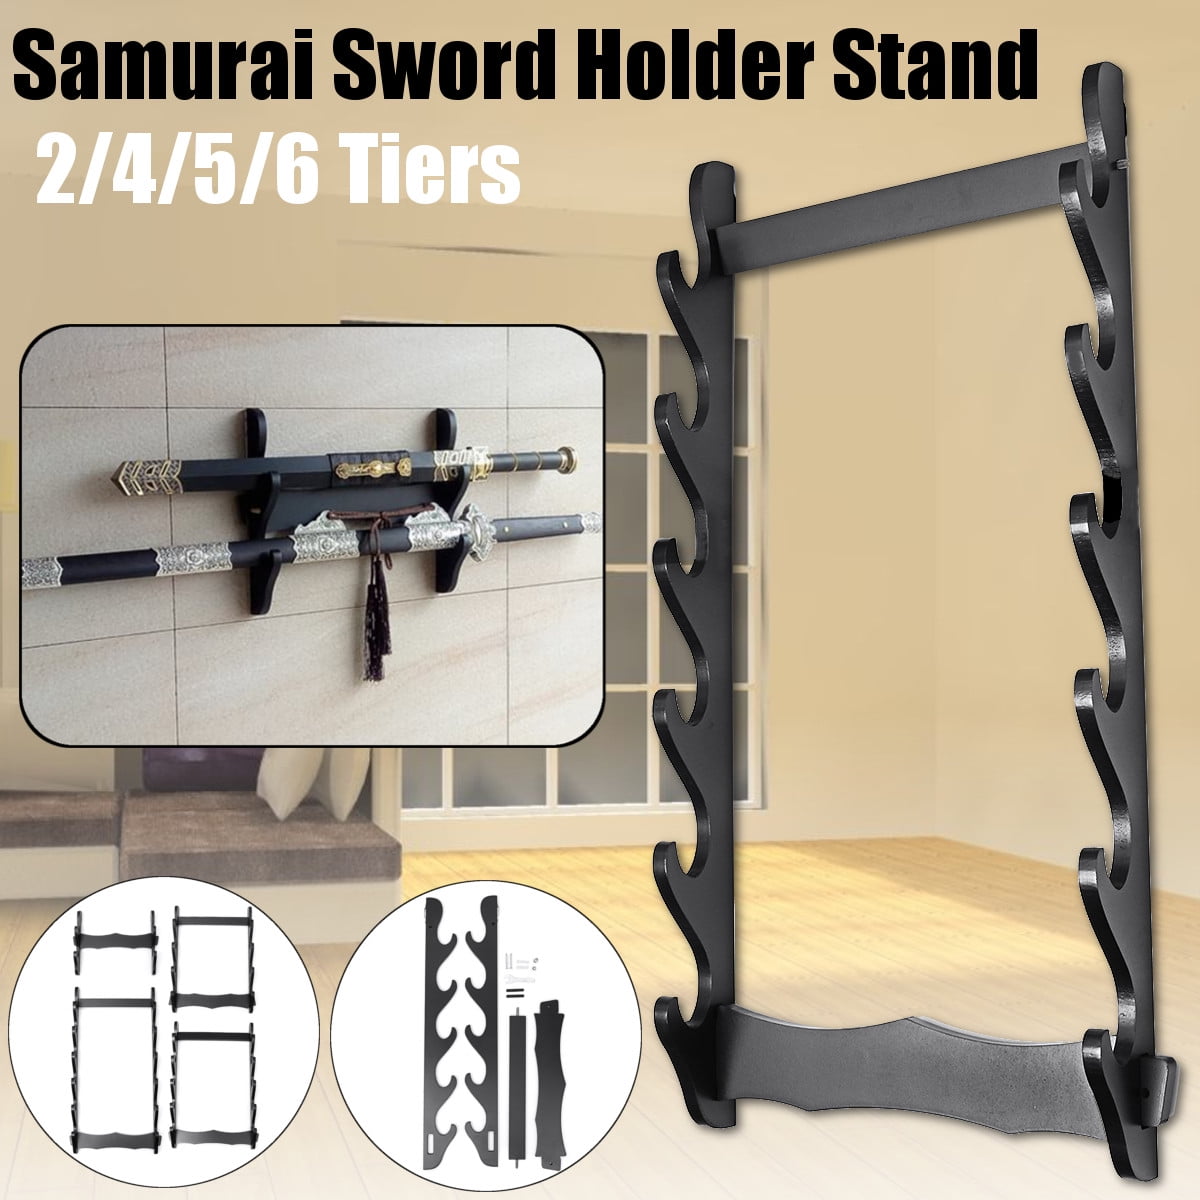 4 Tier Samurai Sword Katana Holder Stand Bracket Display Rack Hanger Decor 